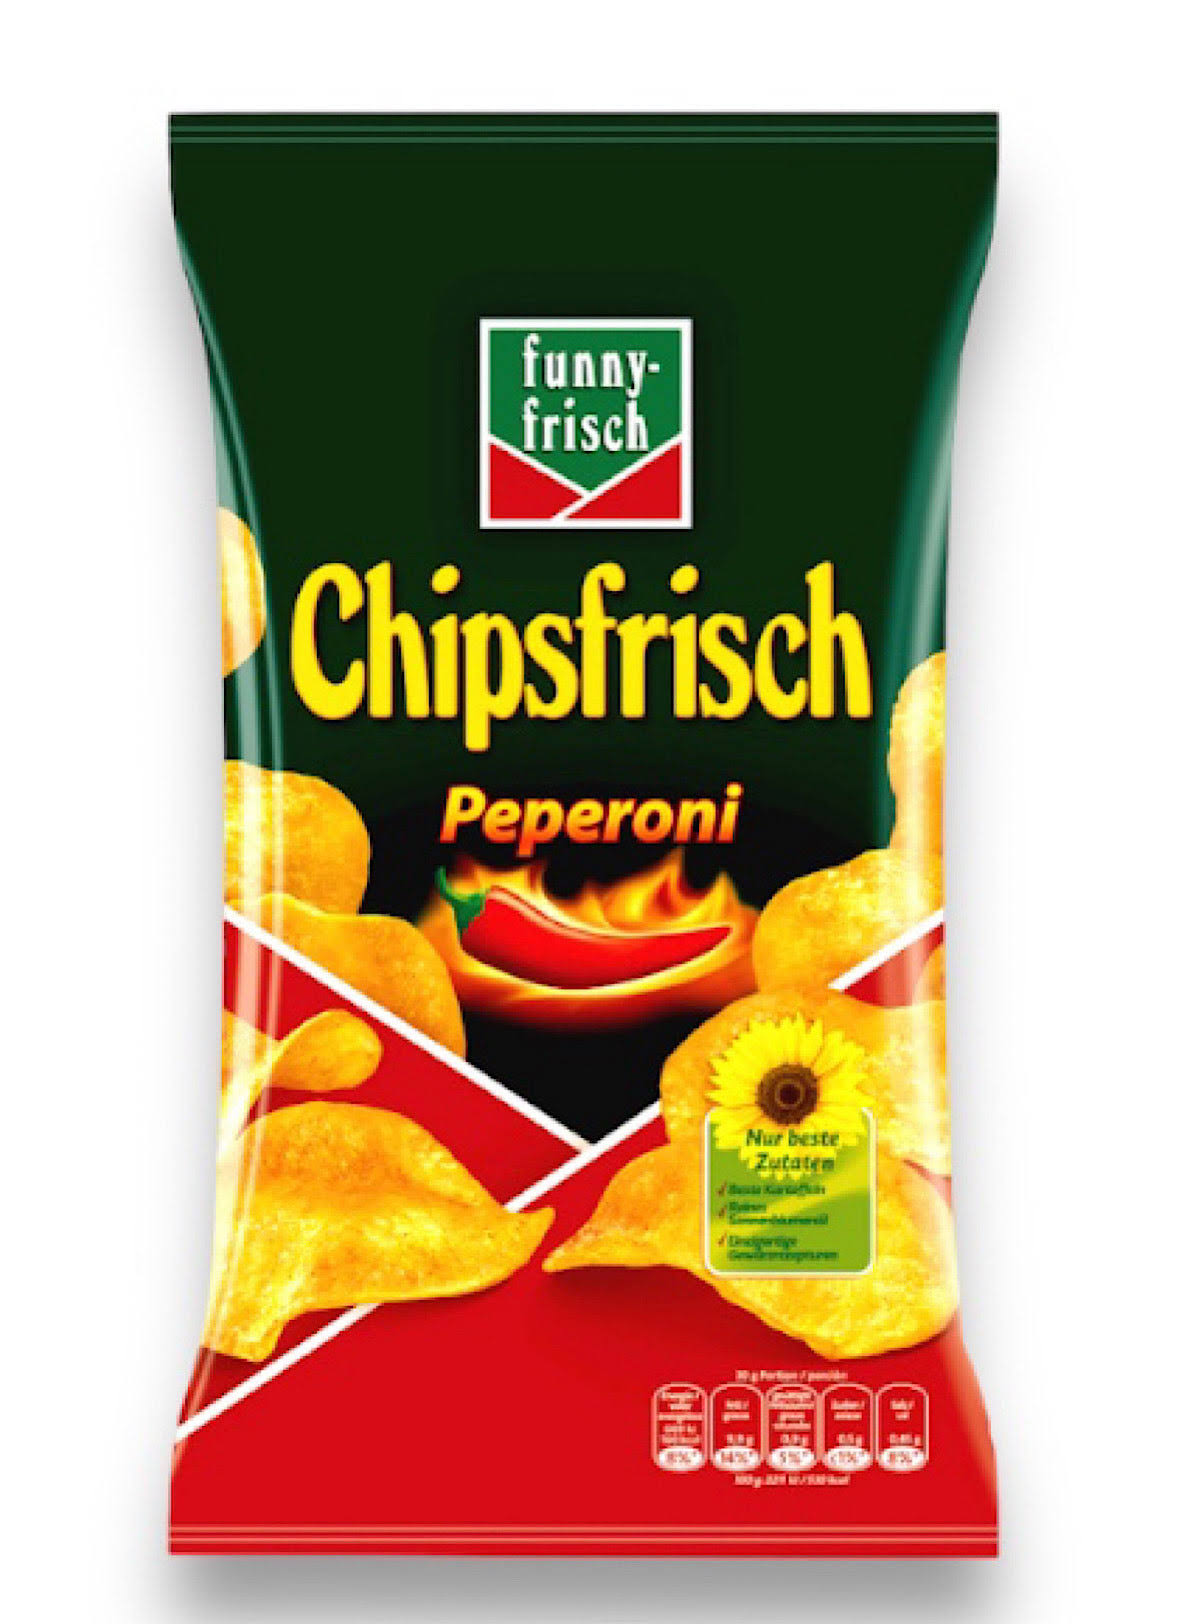 Funny Frisch Chipsfrisch Pepperoni Spicy Fiery Treat 150g